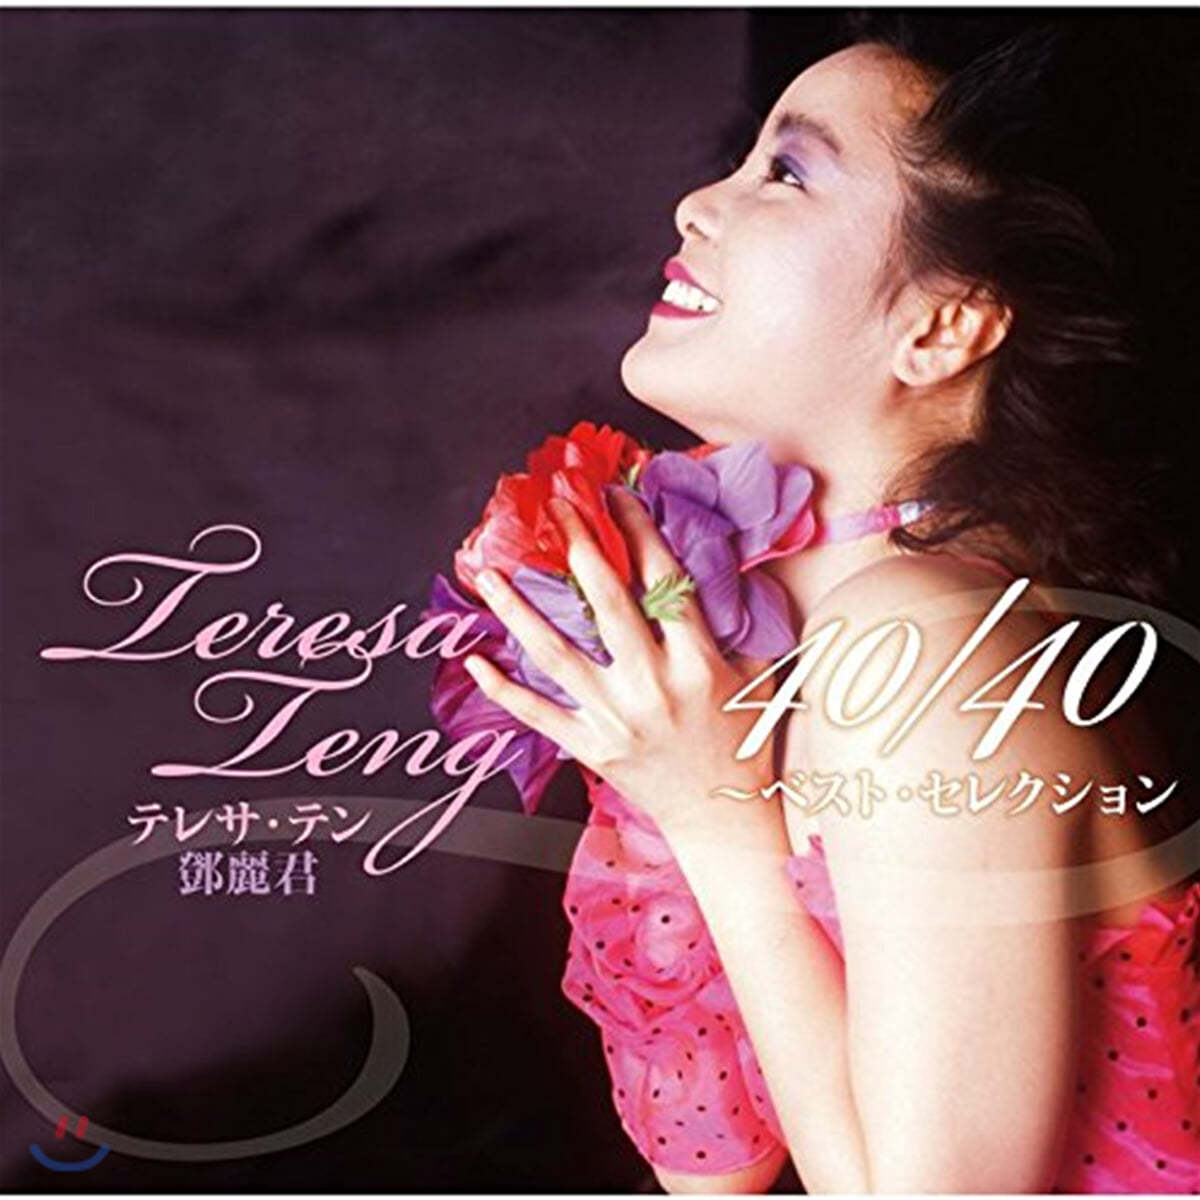 Teresa Teng (등려군) - 40/40 Best Selection